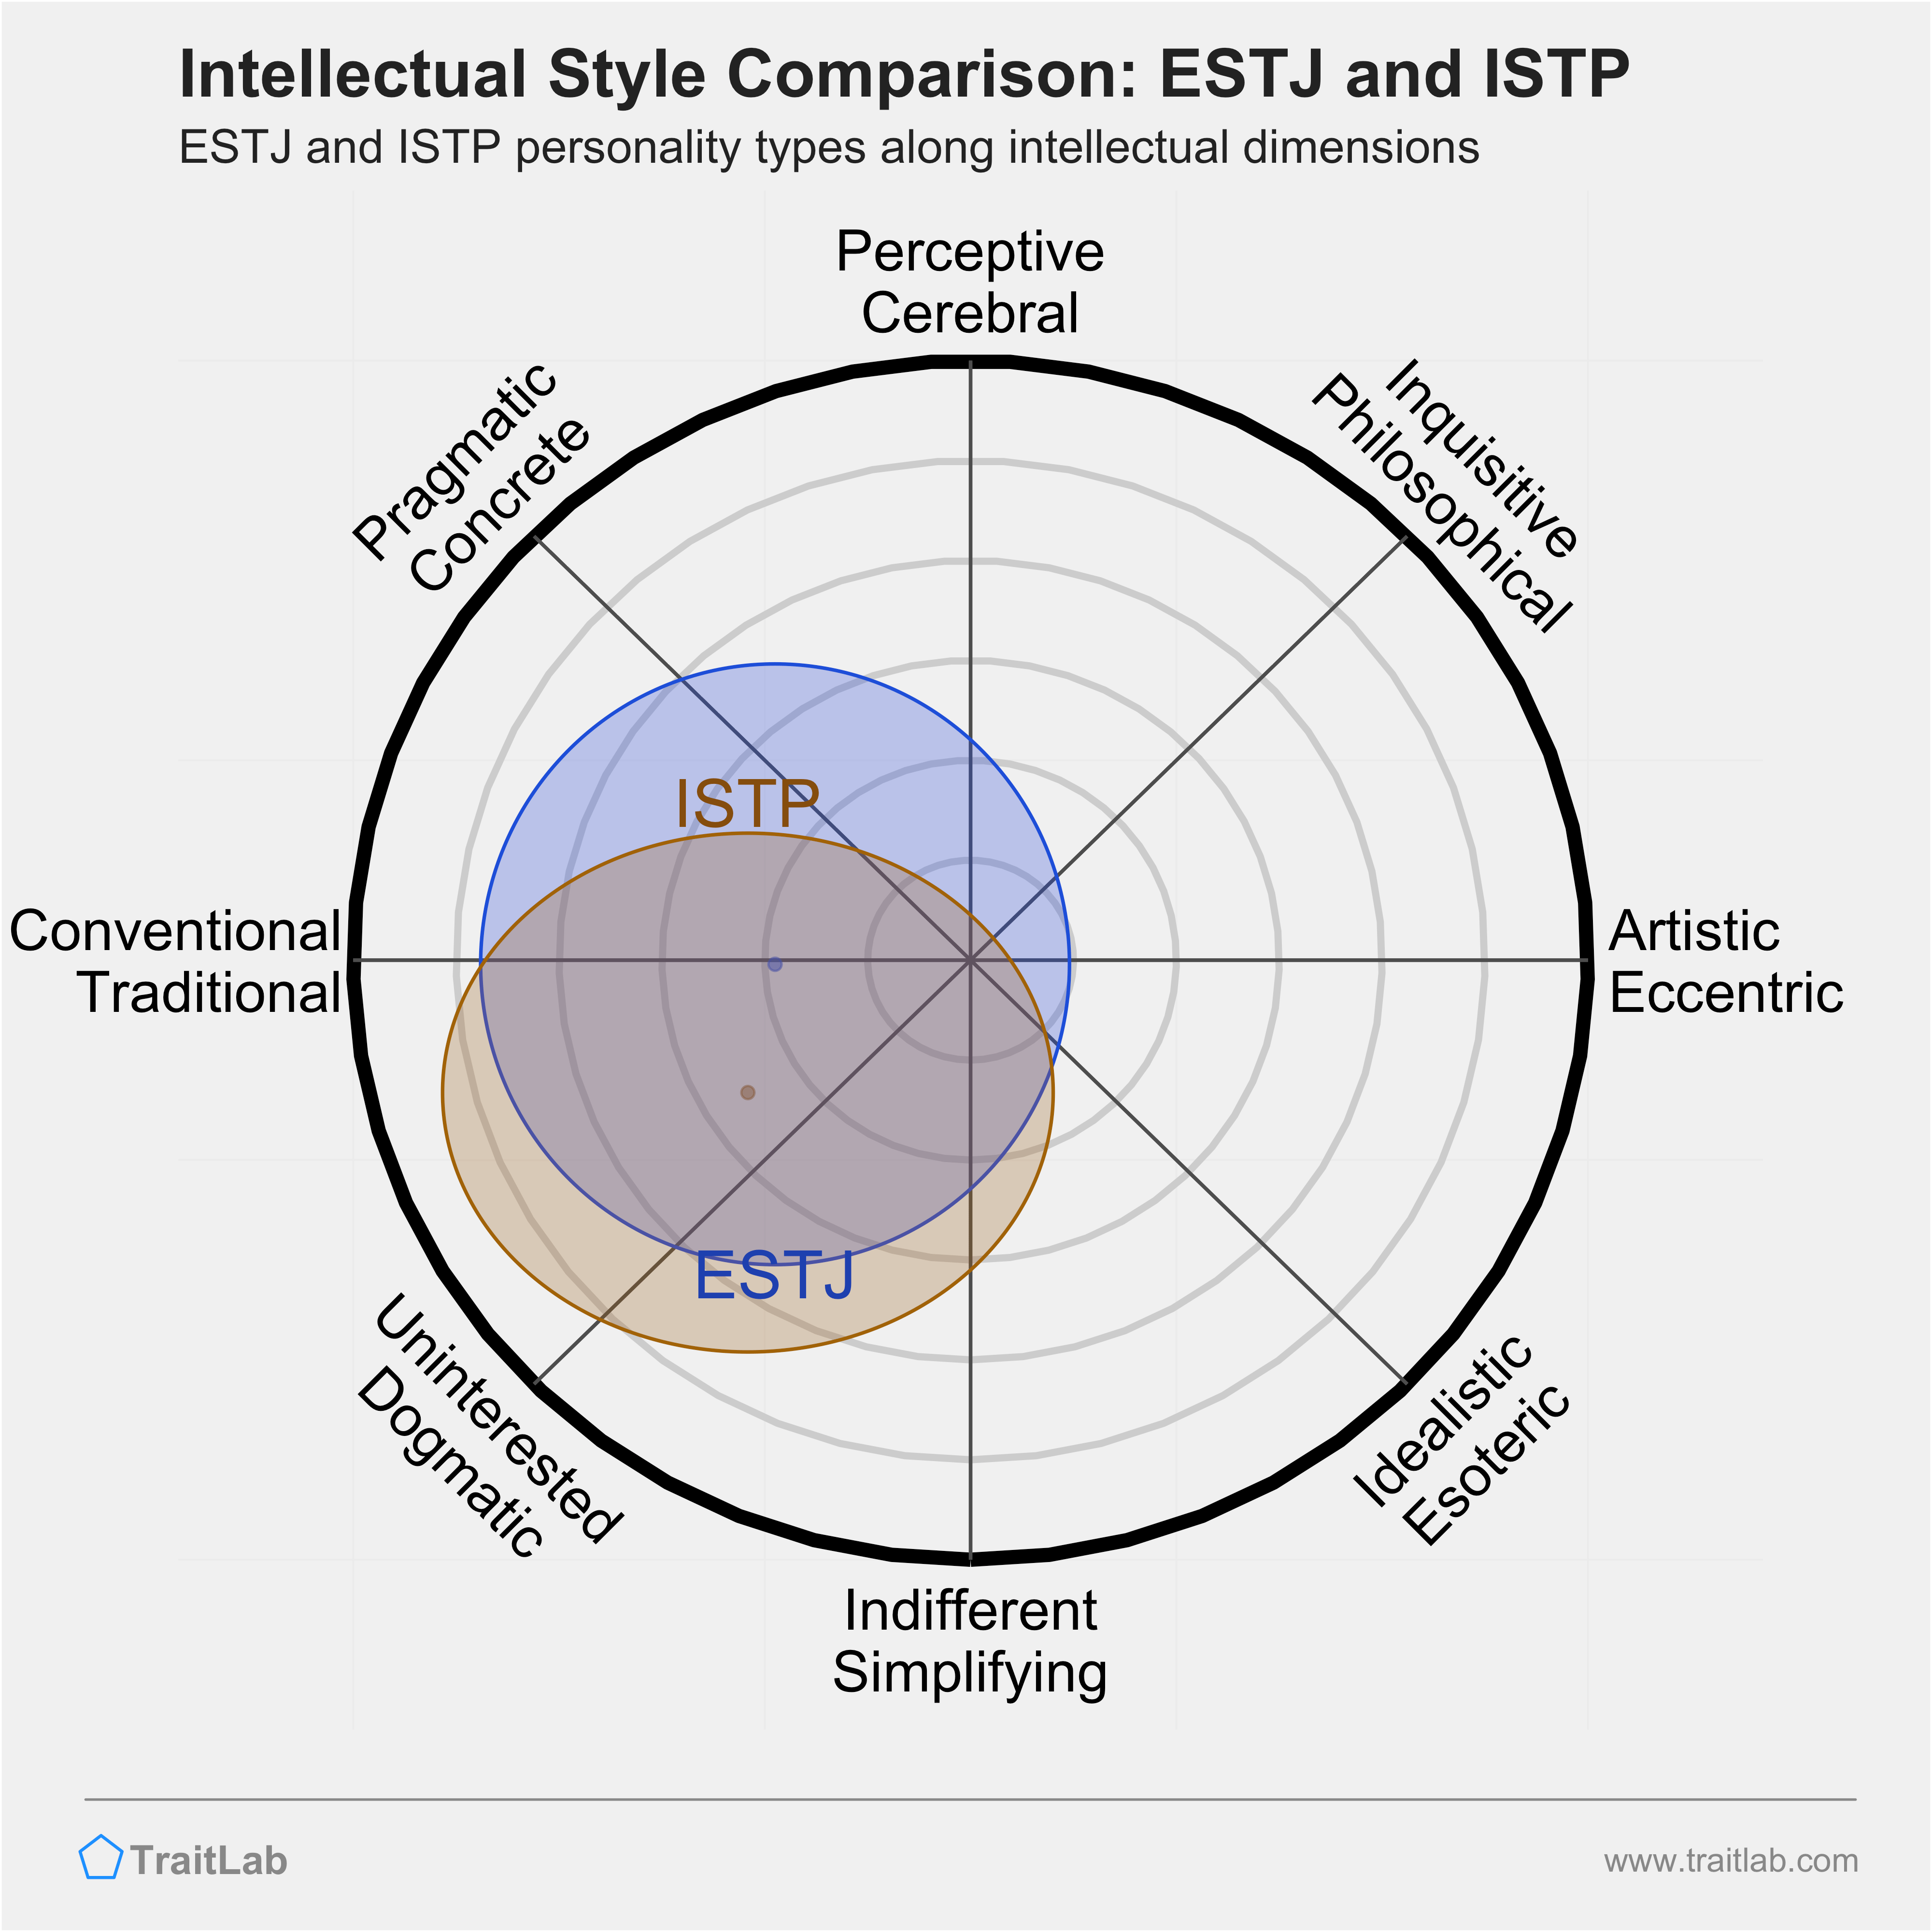 ESTJ and ISTP comparison across intellectual dimensions